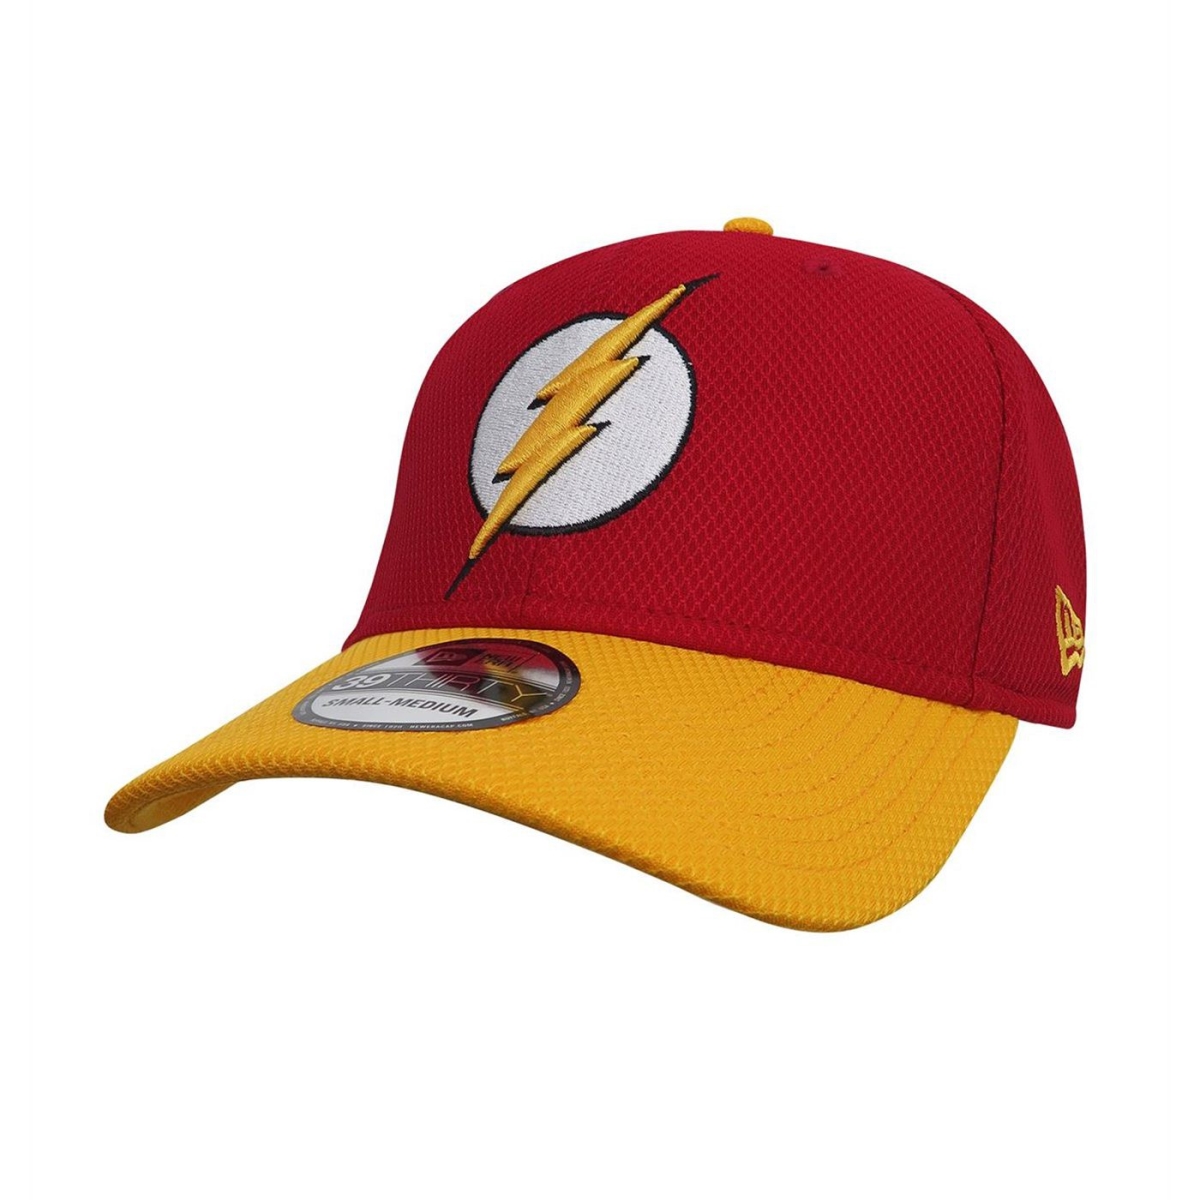 Picture of Flash capflashredyell-m-l-Medium-Large Flash 39 Thirty Red & Yellow Baseball Hat - Medium & Large